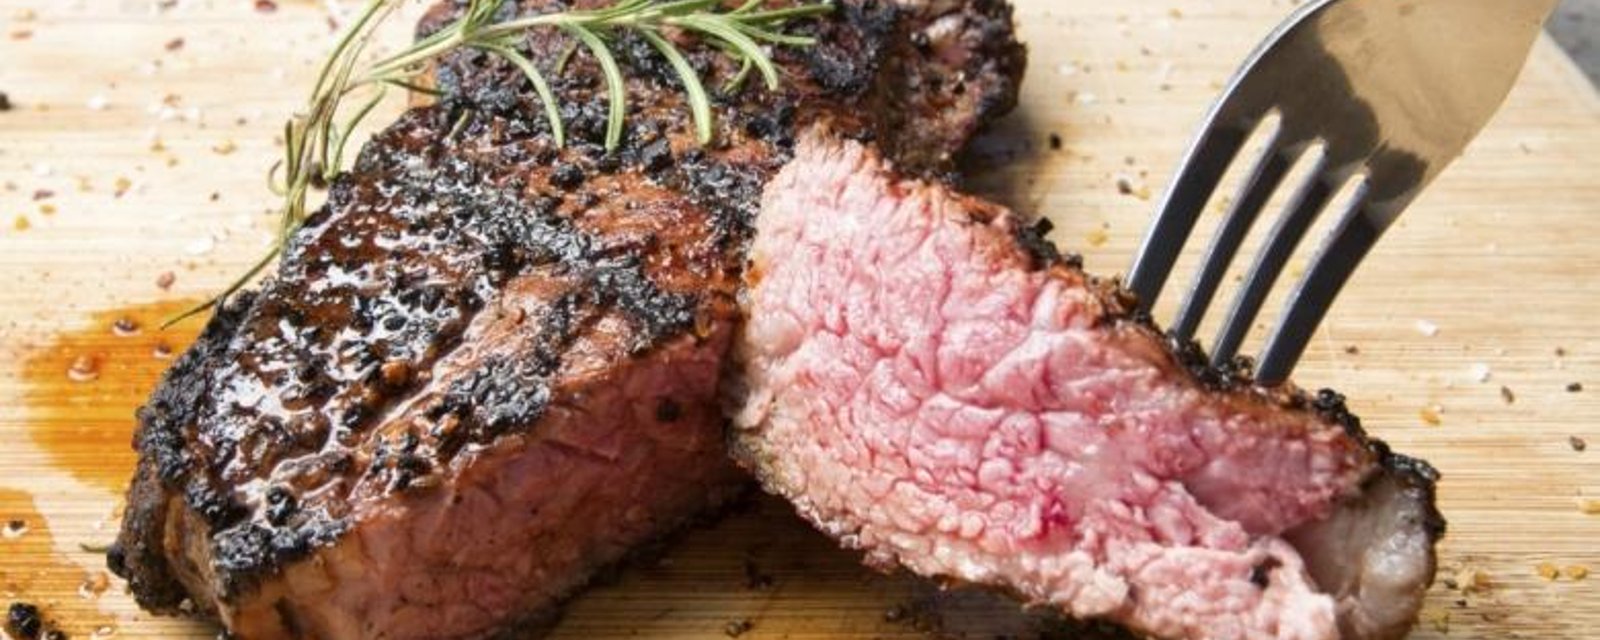 BBQ : Marinade facile...Un steak parfait